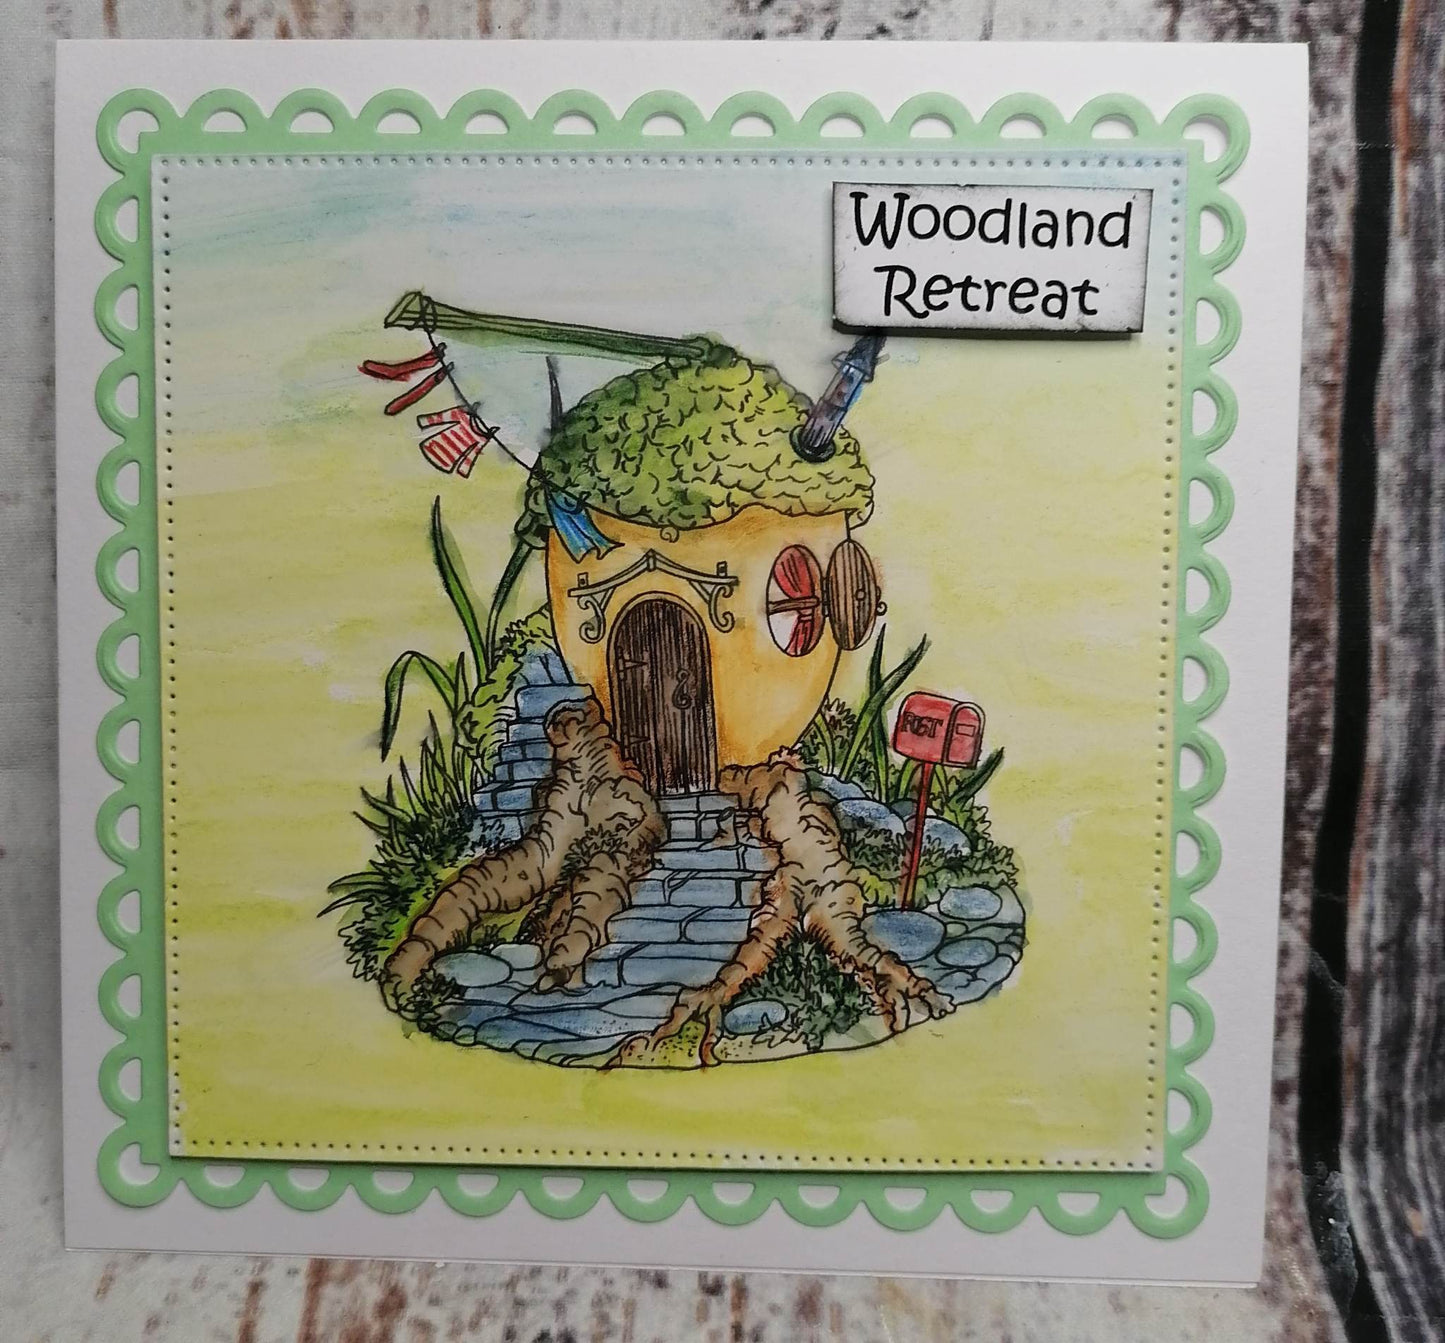 Linda Ravenscroft: Fairyland - Fruity Houses Stamp Collection